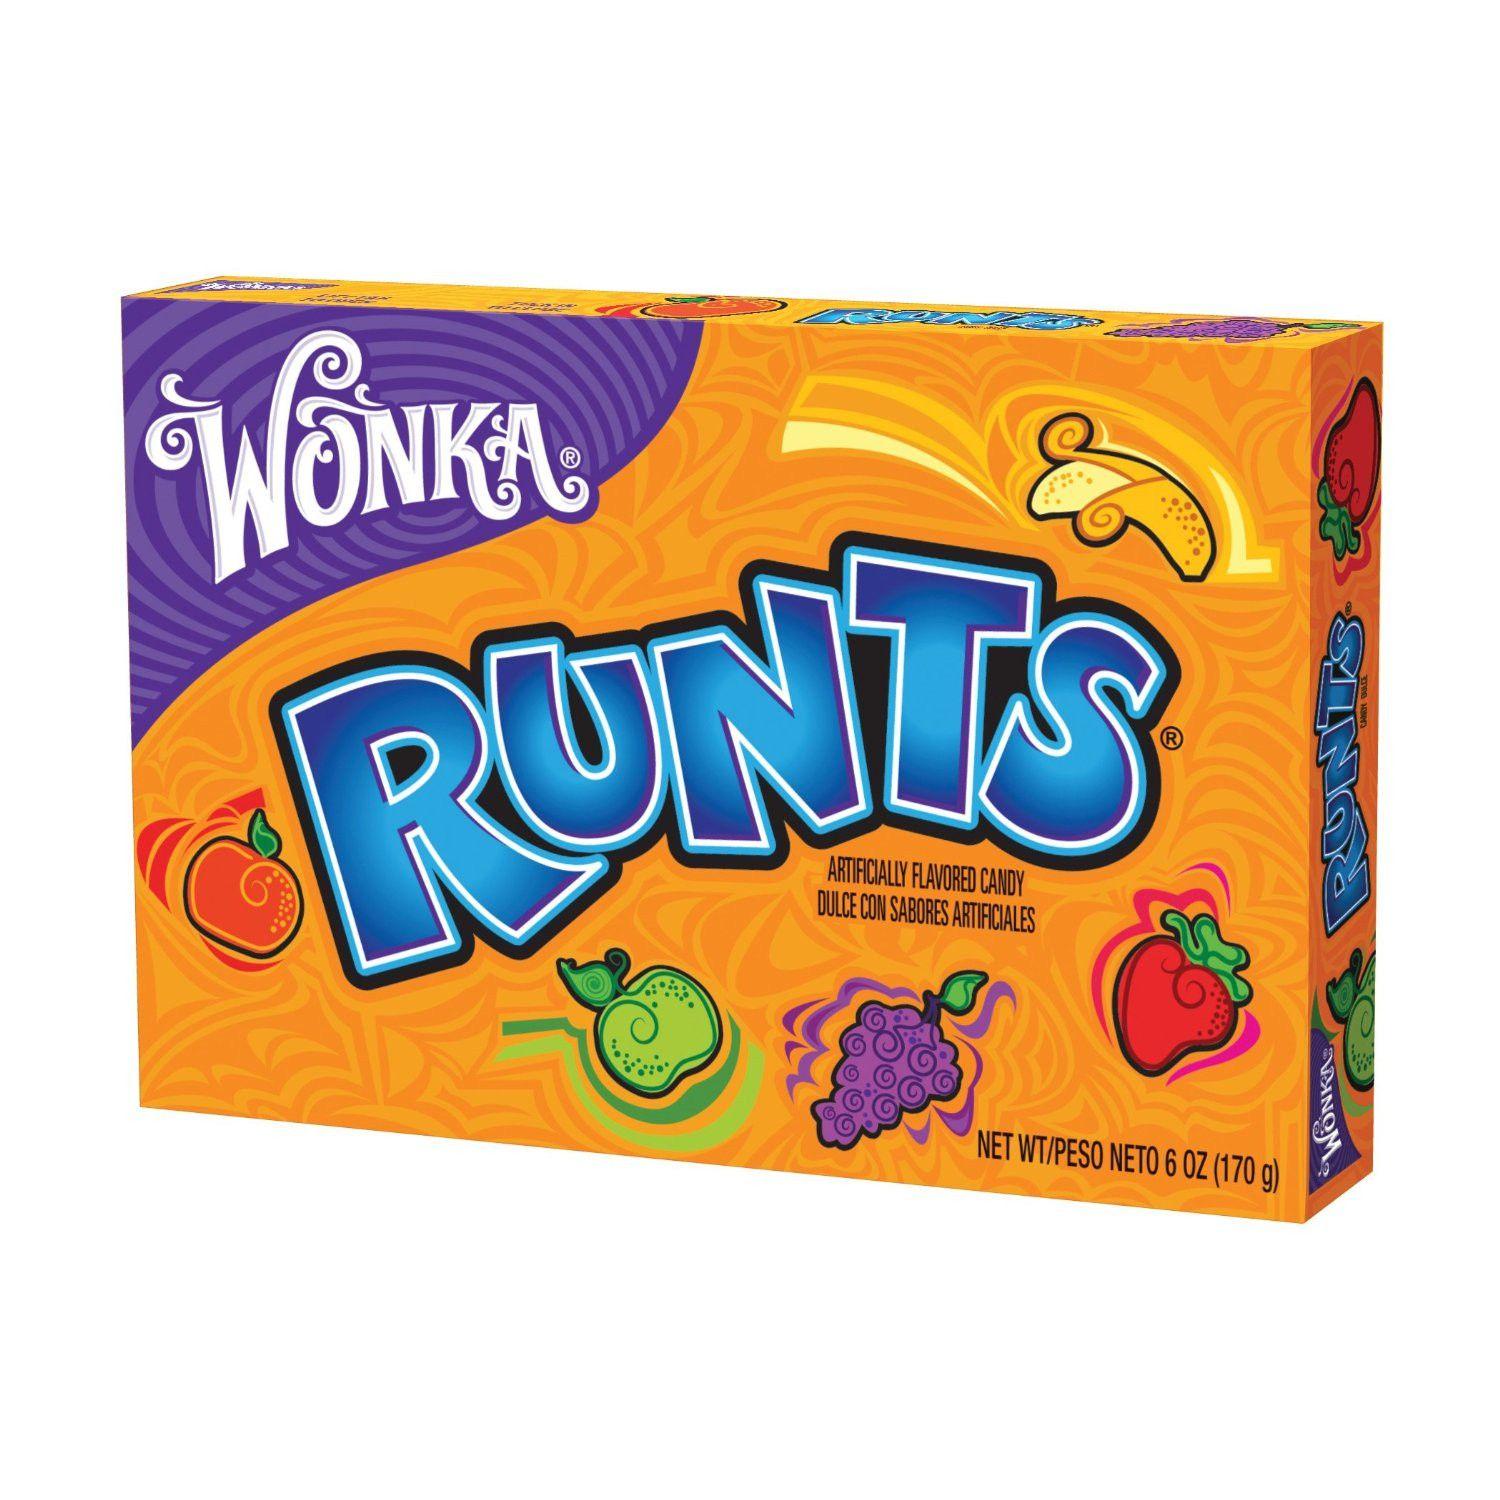 Runts Logo - Wonka Runts Theatre Box 141.7g